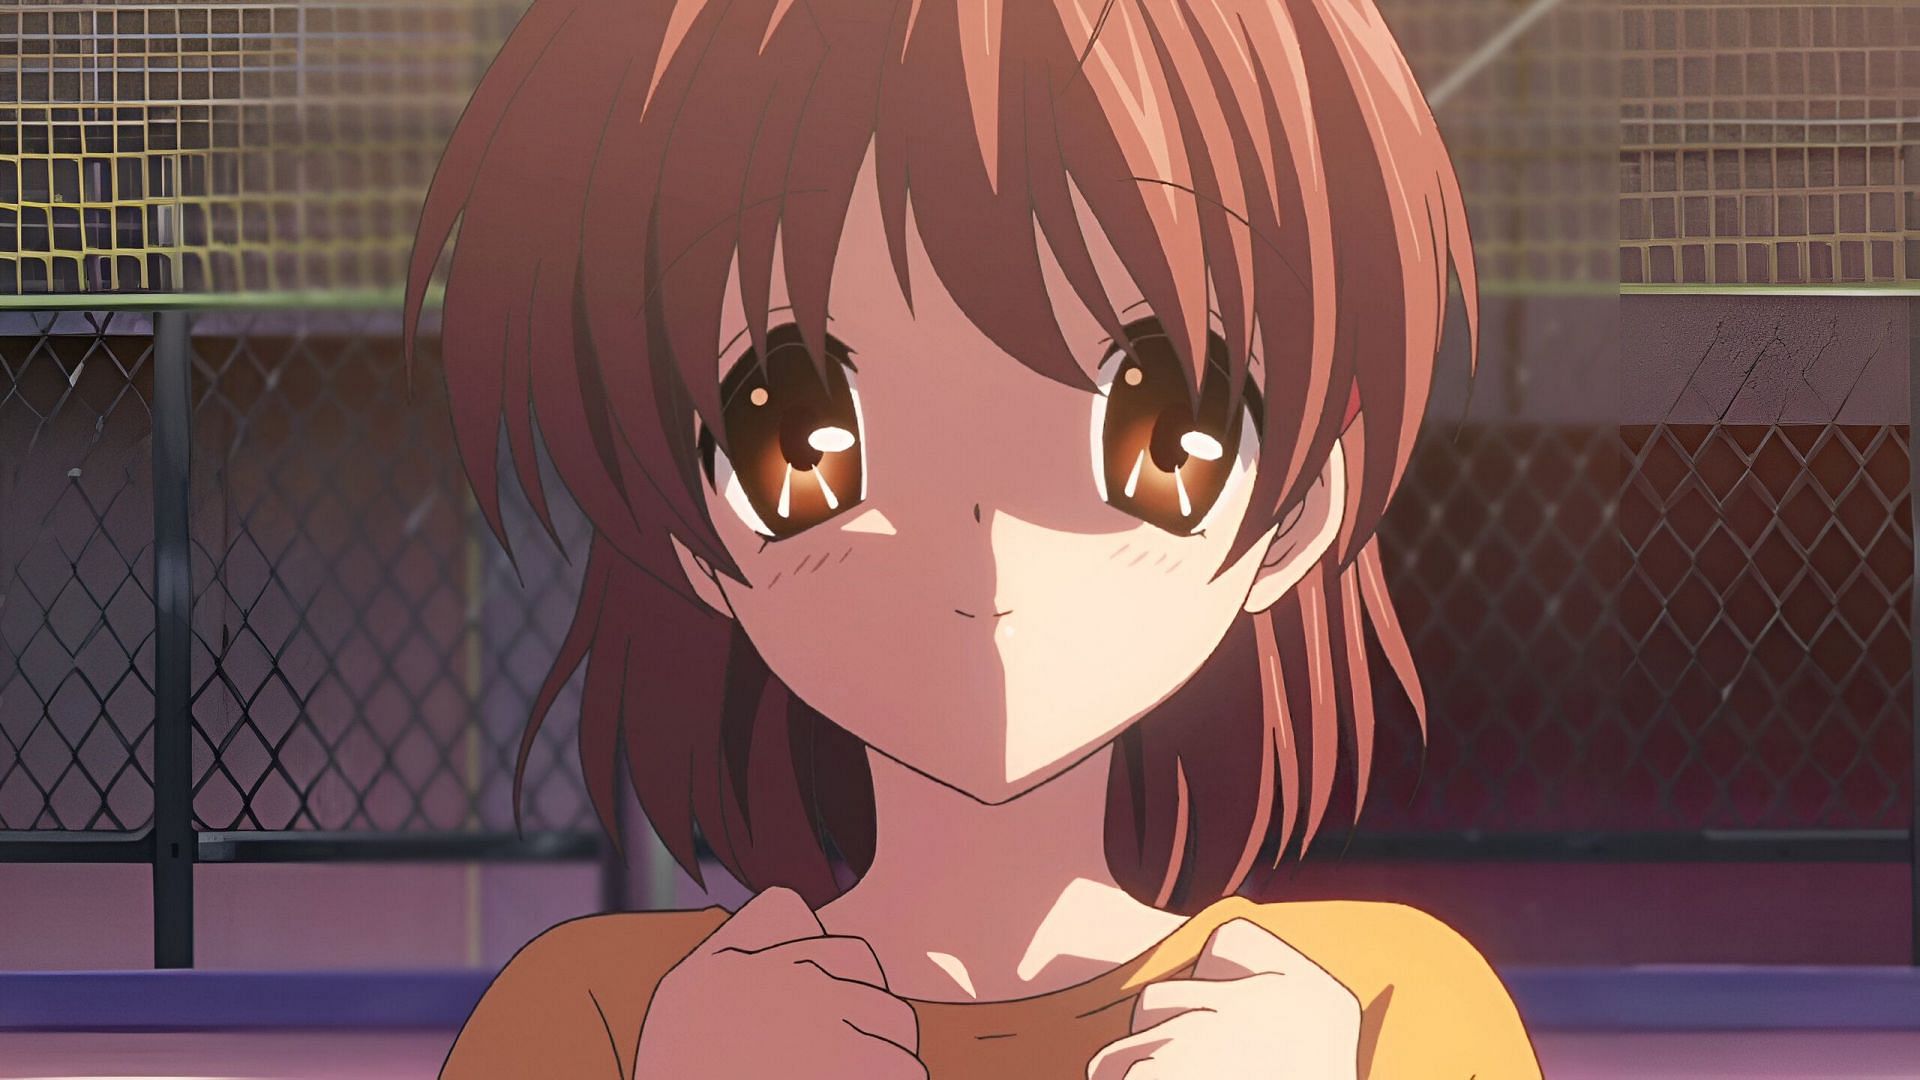 Nagisa as seen in the anime (Image via KyoAni)